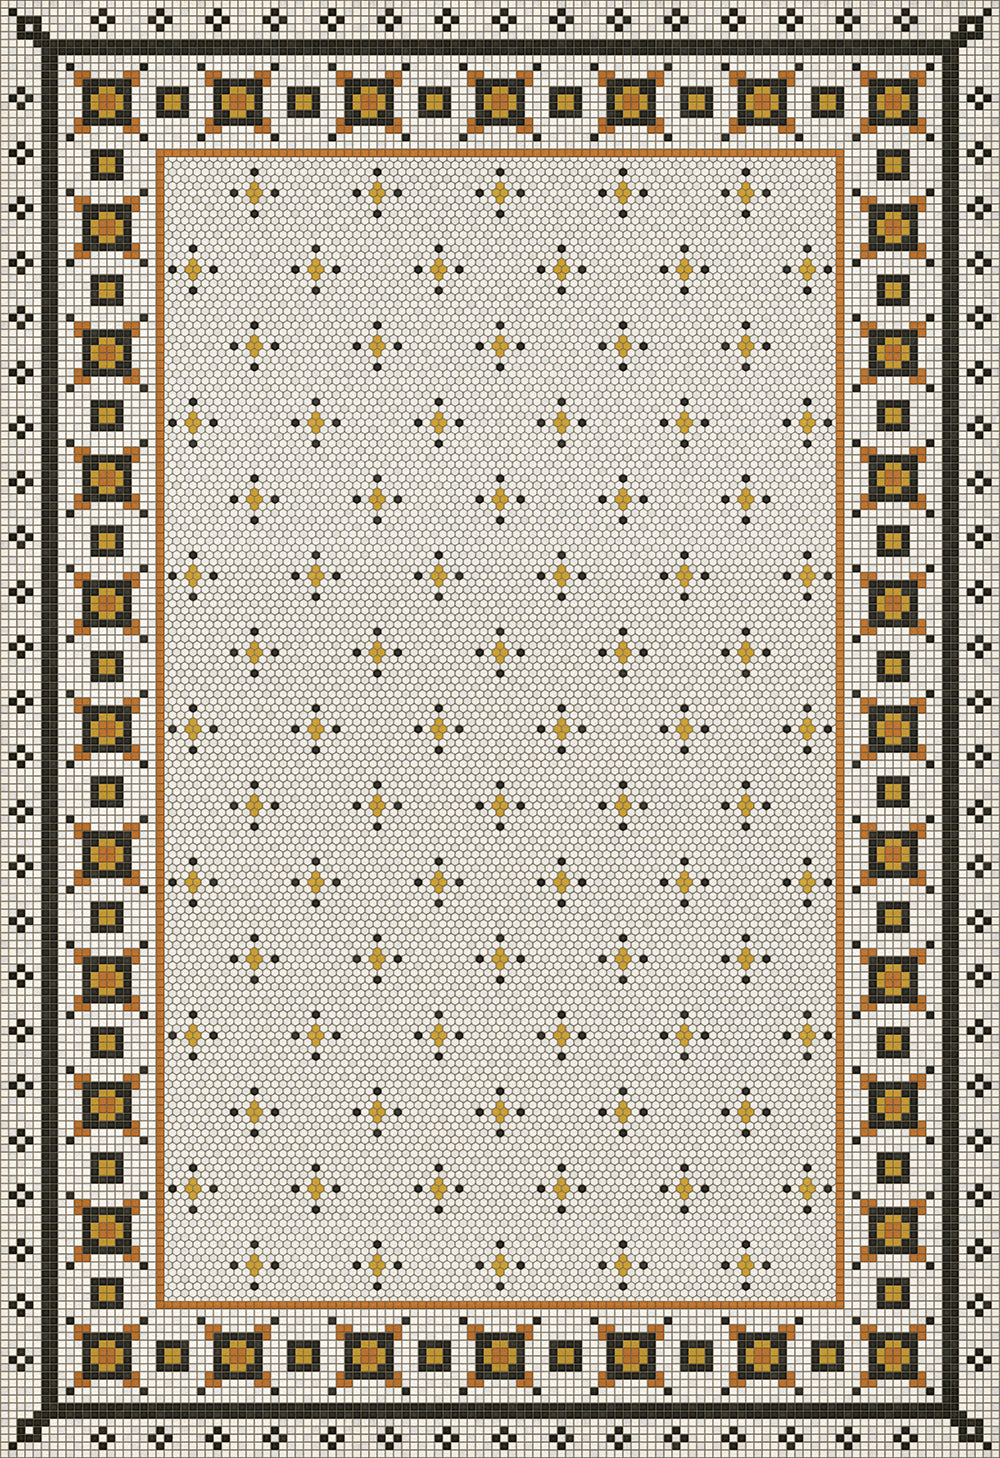 Spicher & Co Pattern 09 Checkmate - 96 x 140